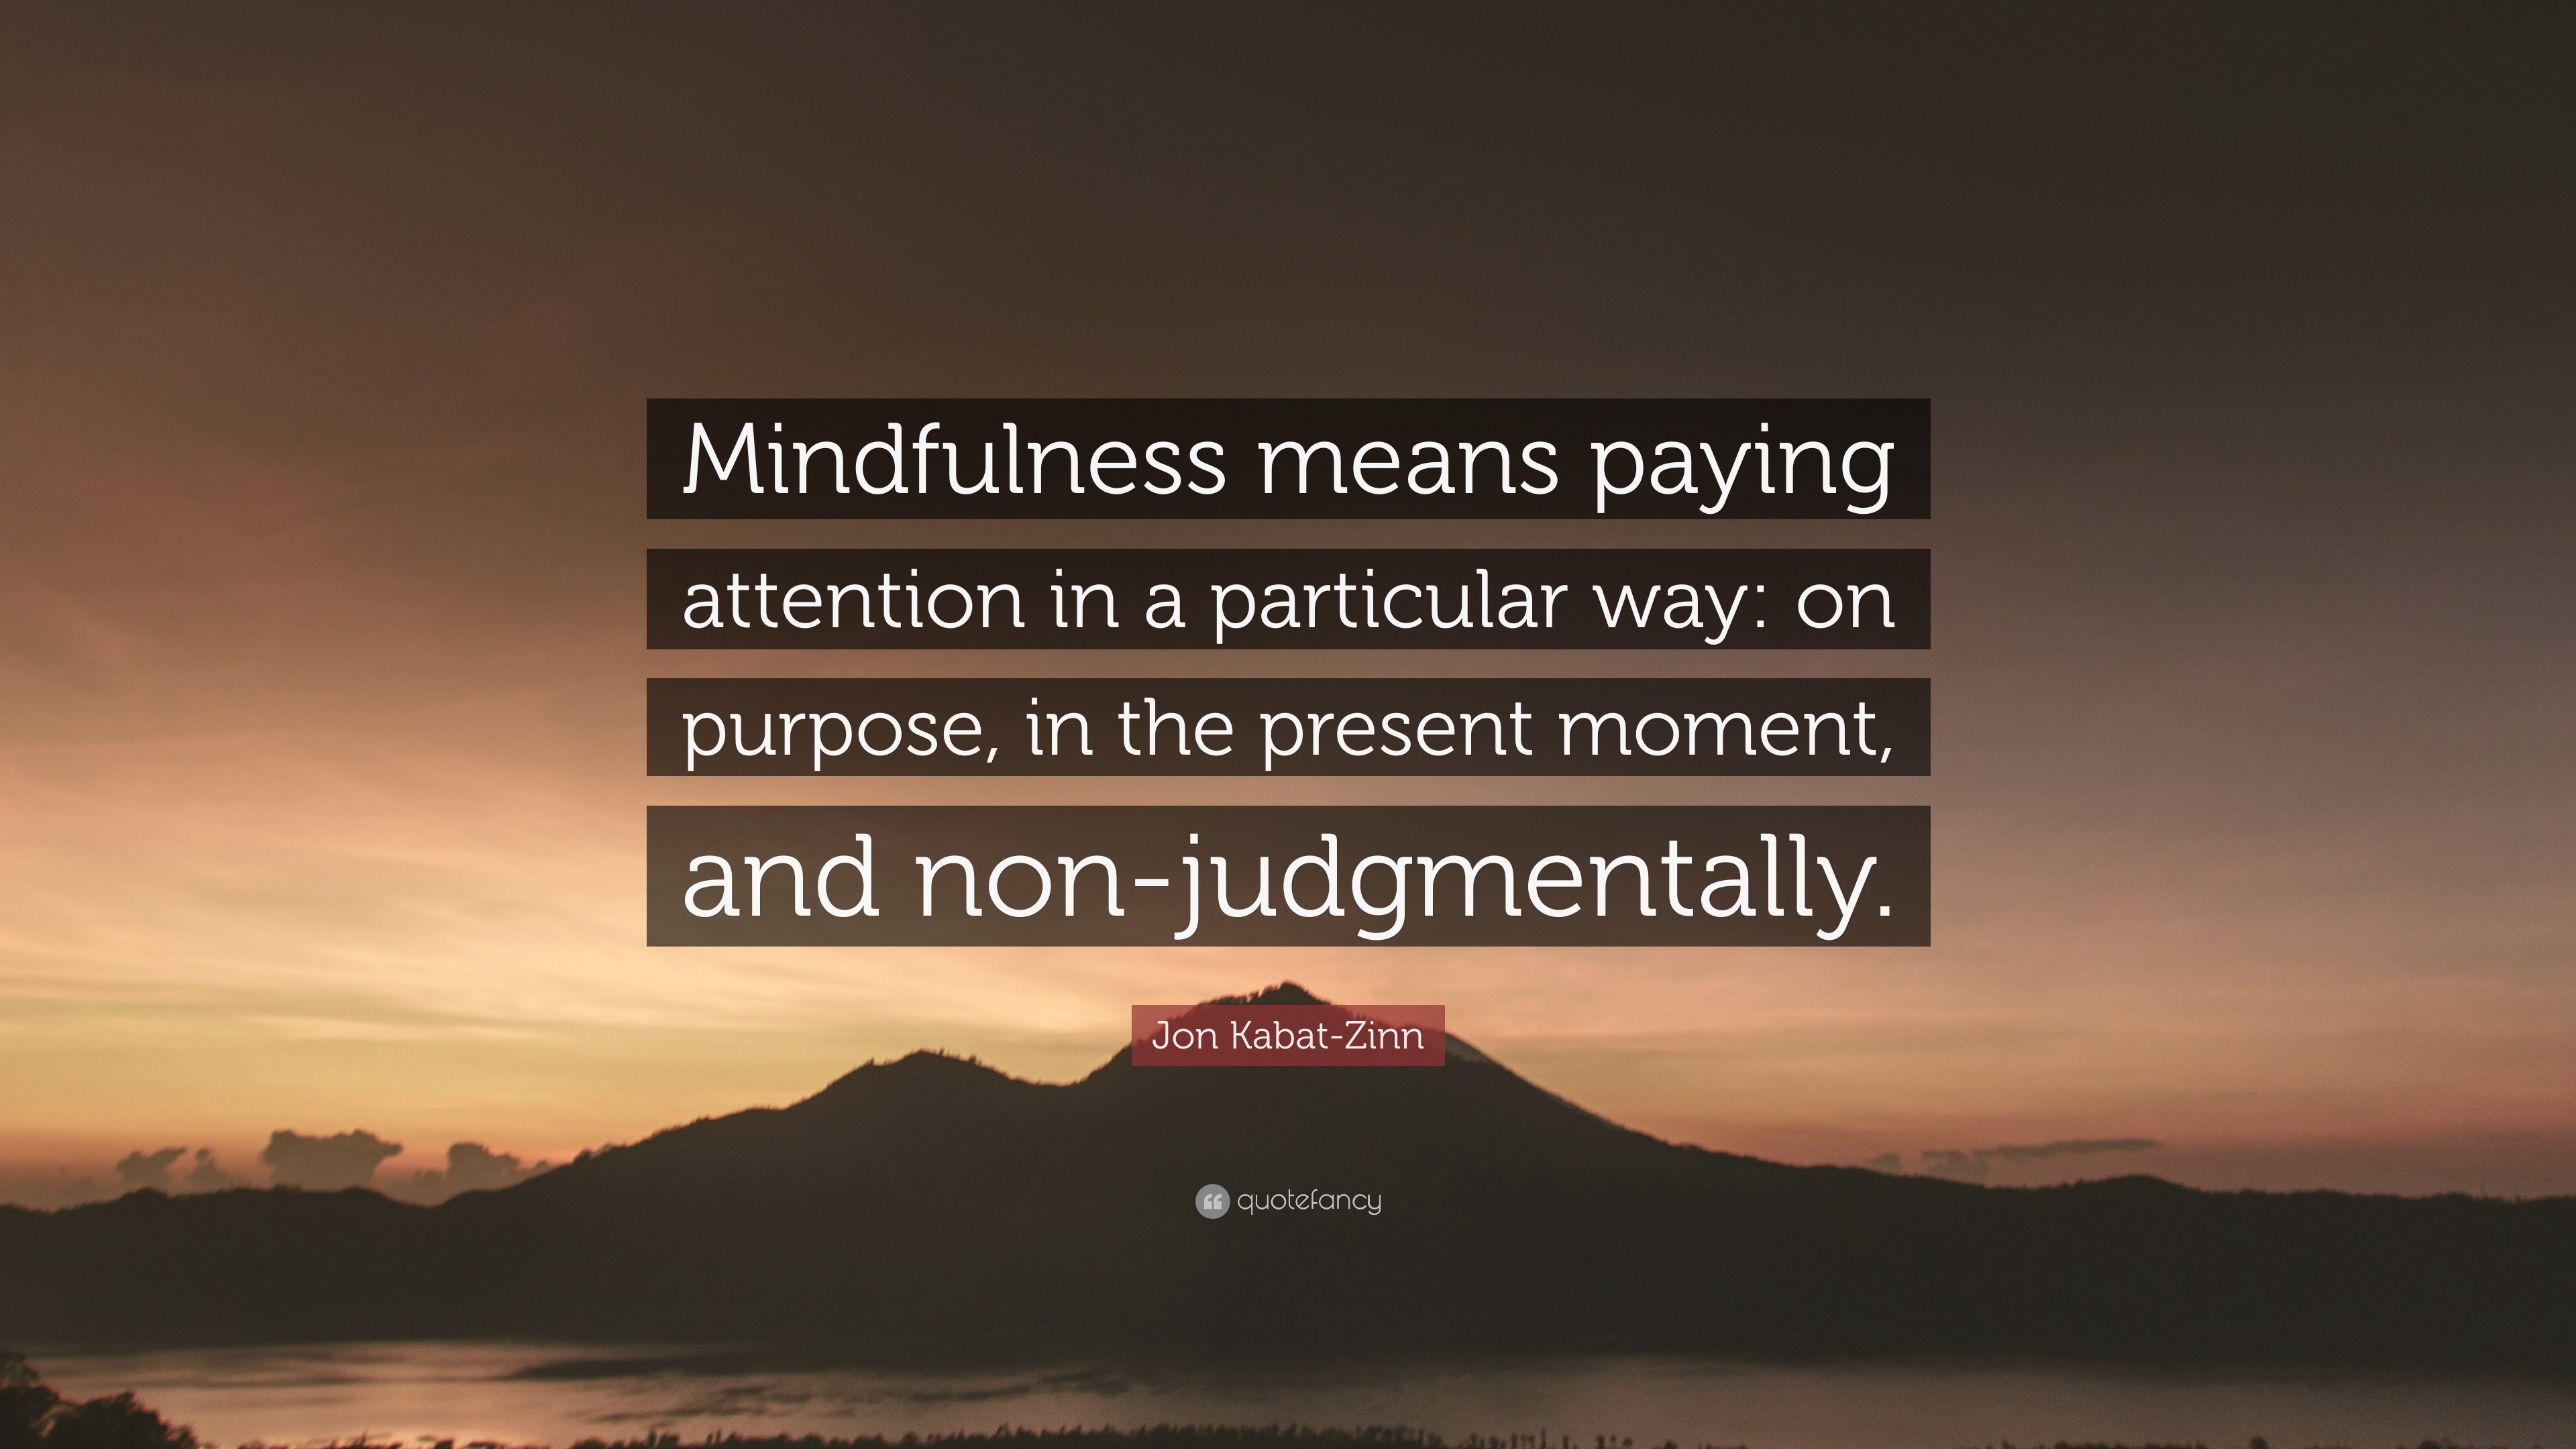 mindful moments